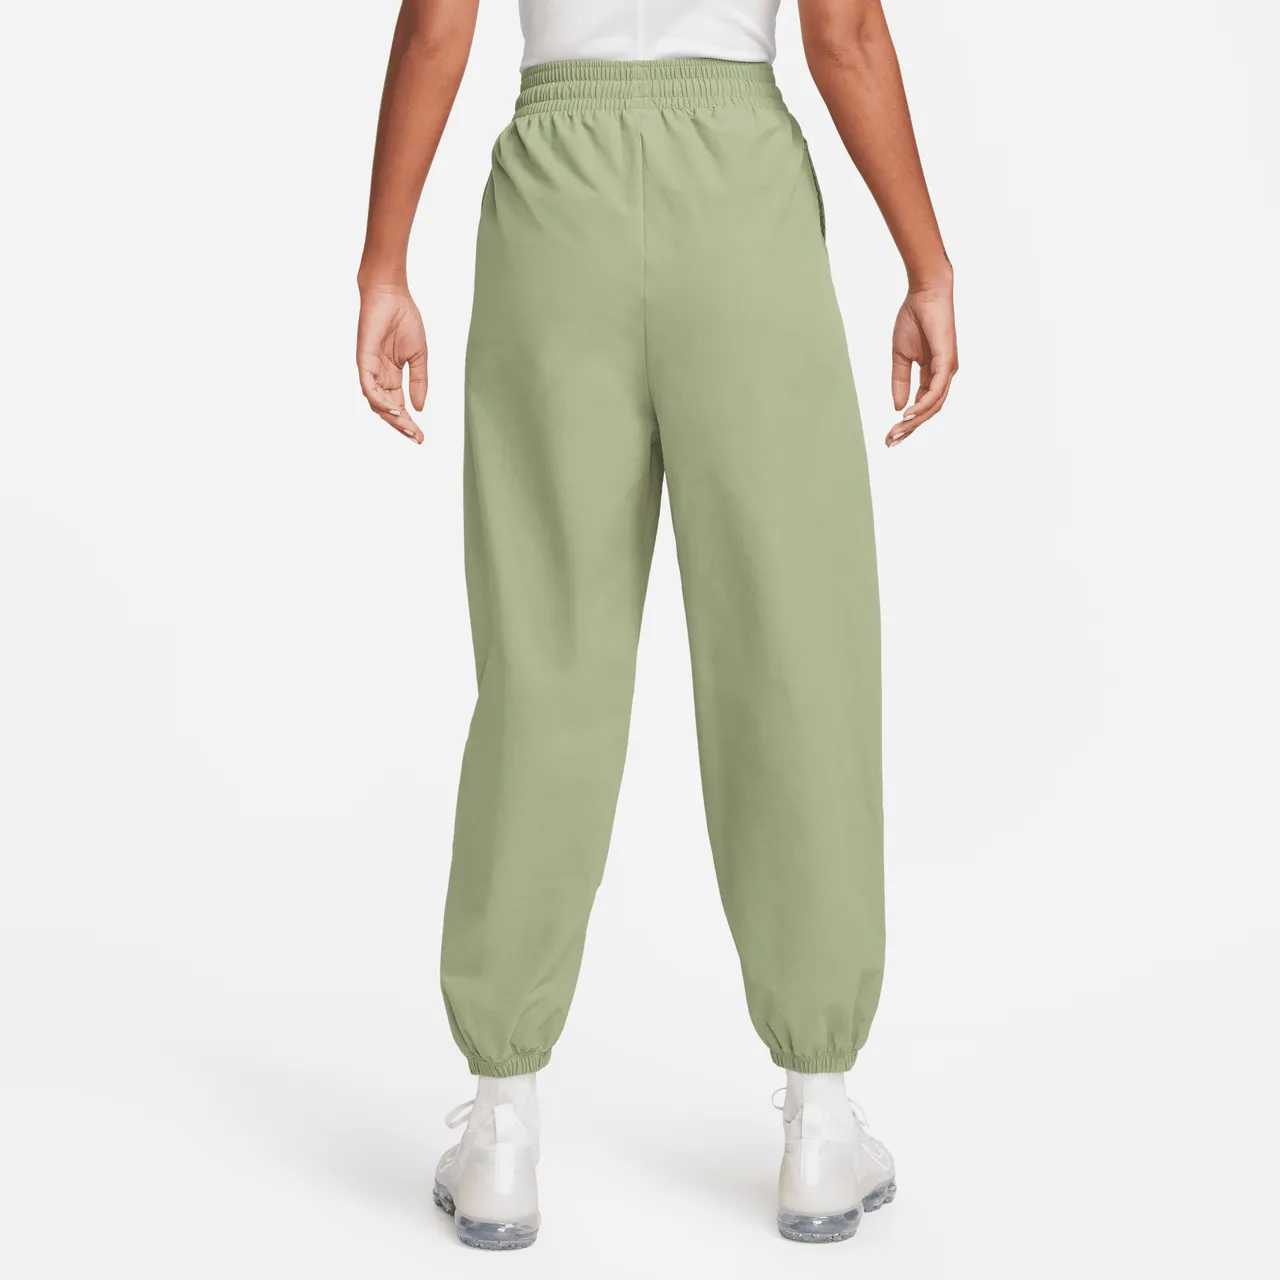 Nike Sportswear geweven joggingbroek voor dames - Groen